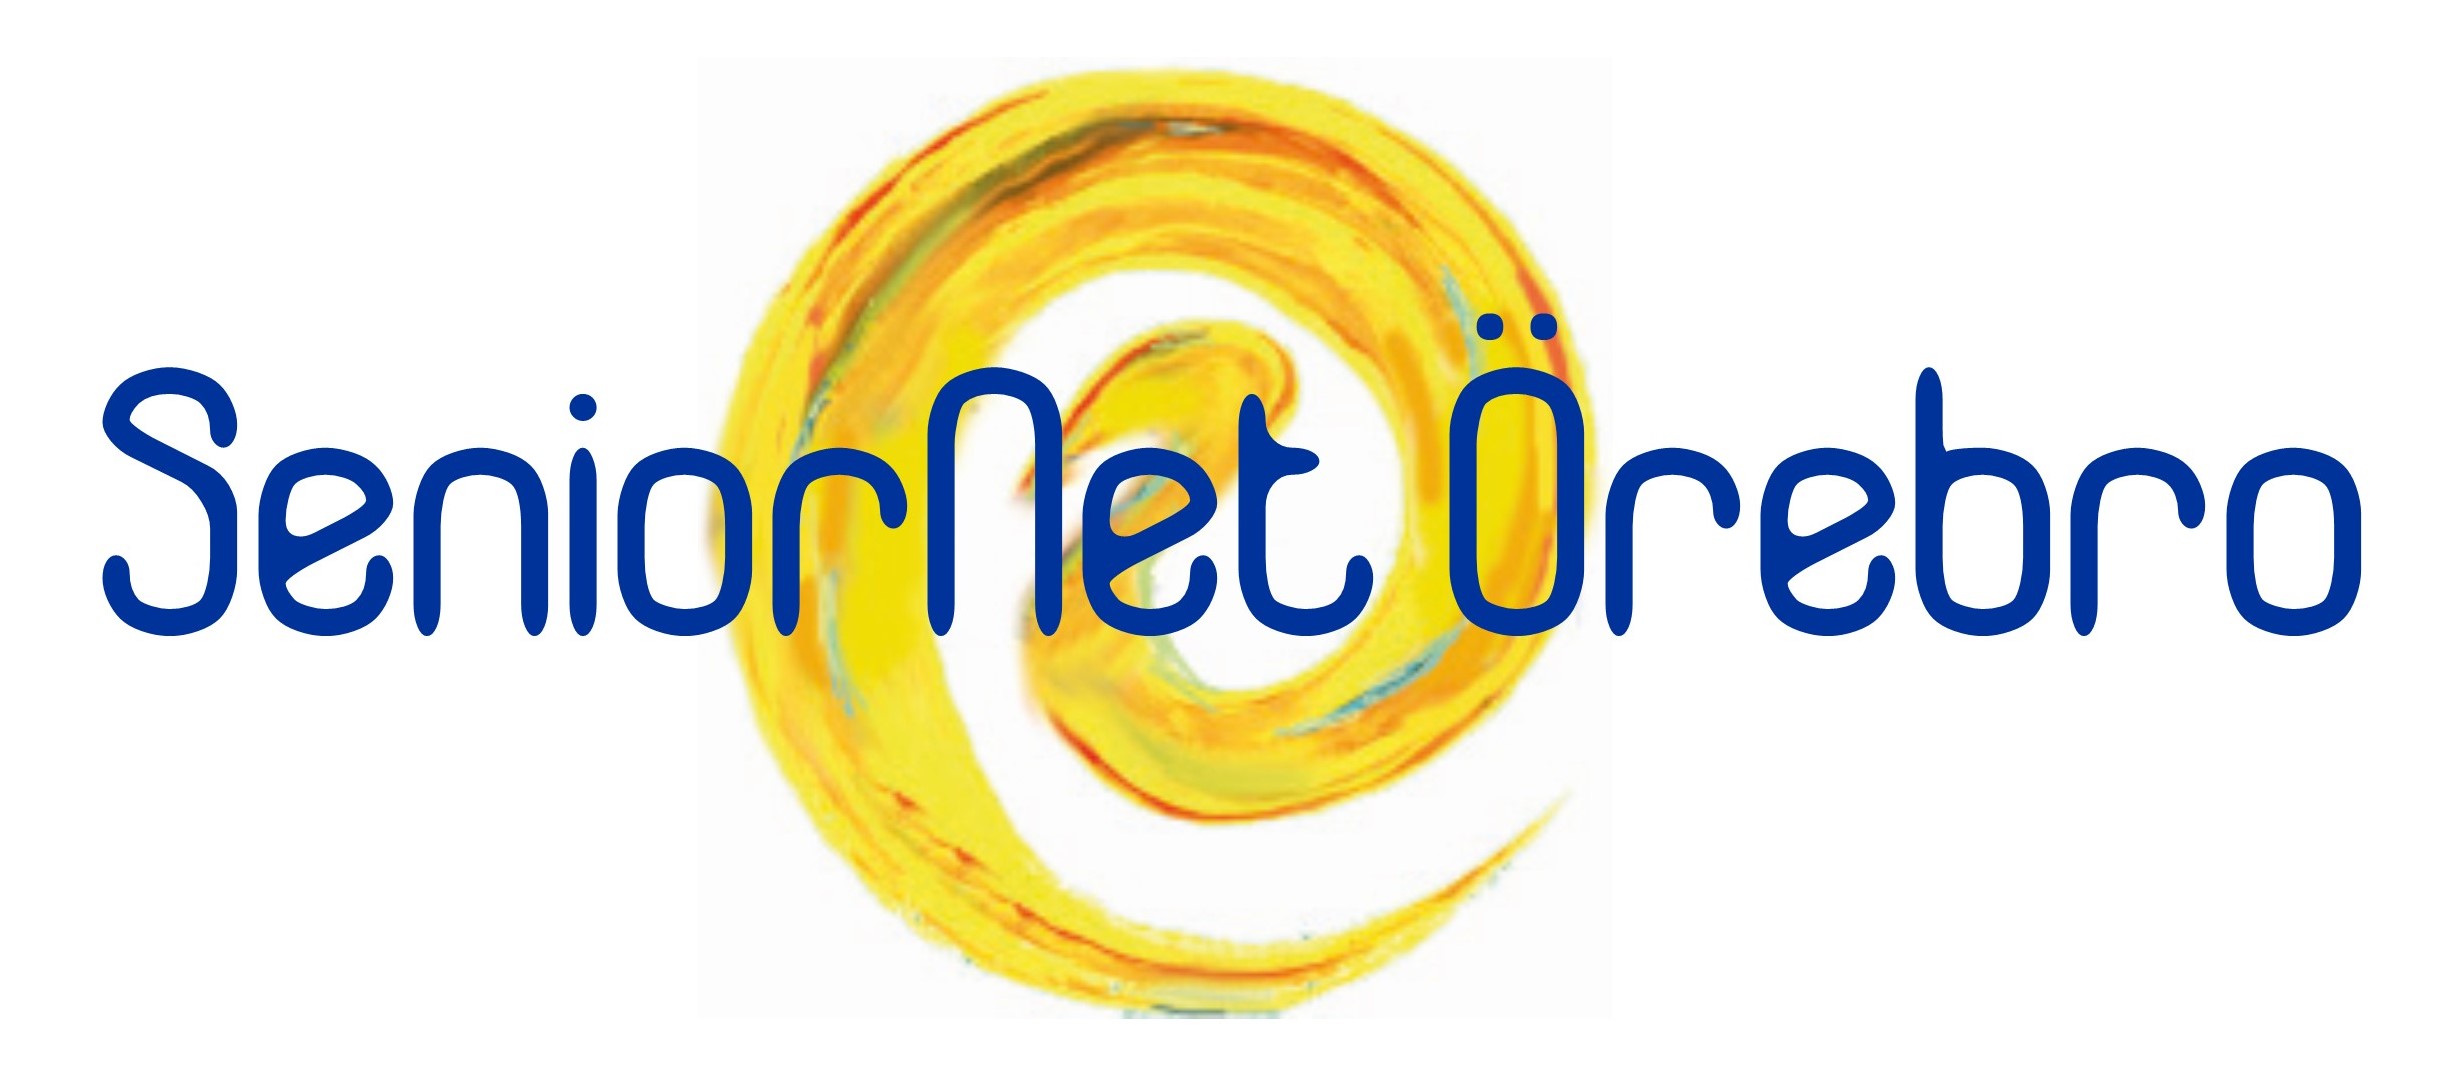 Senior Net Örebros logga